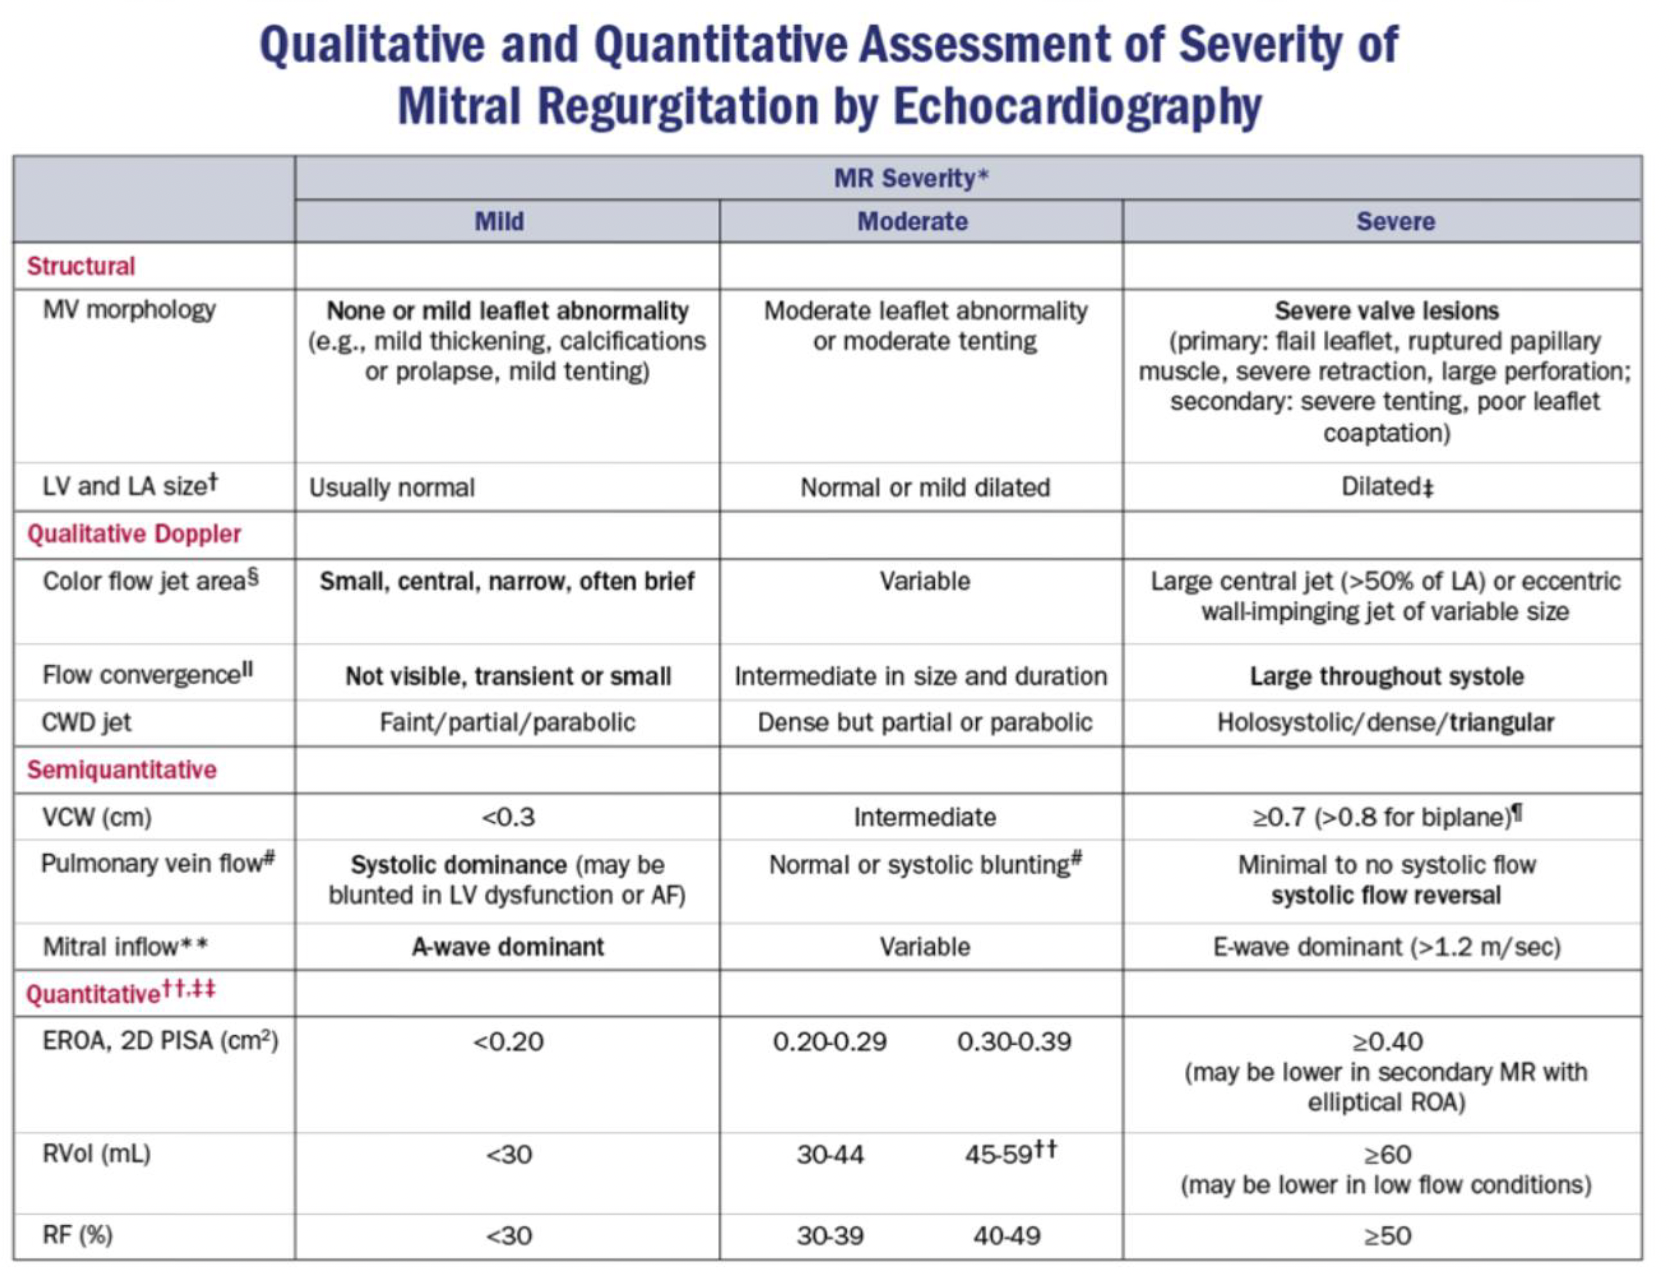 Qualitative and Quantitative Assessment of MR severity by echo